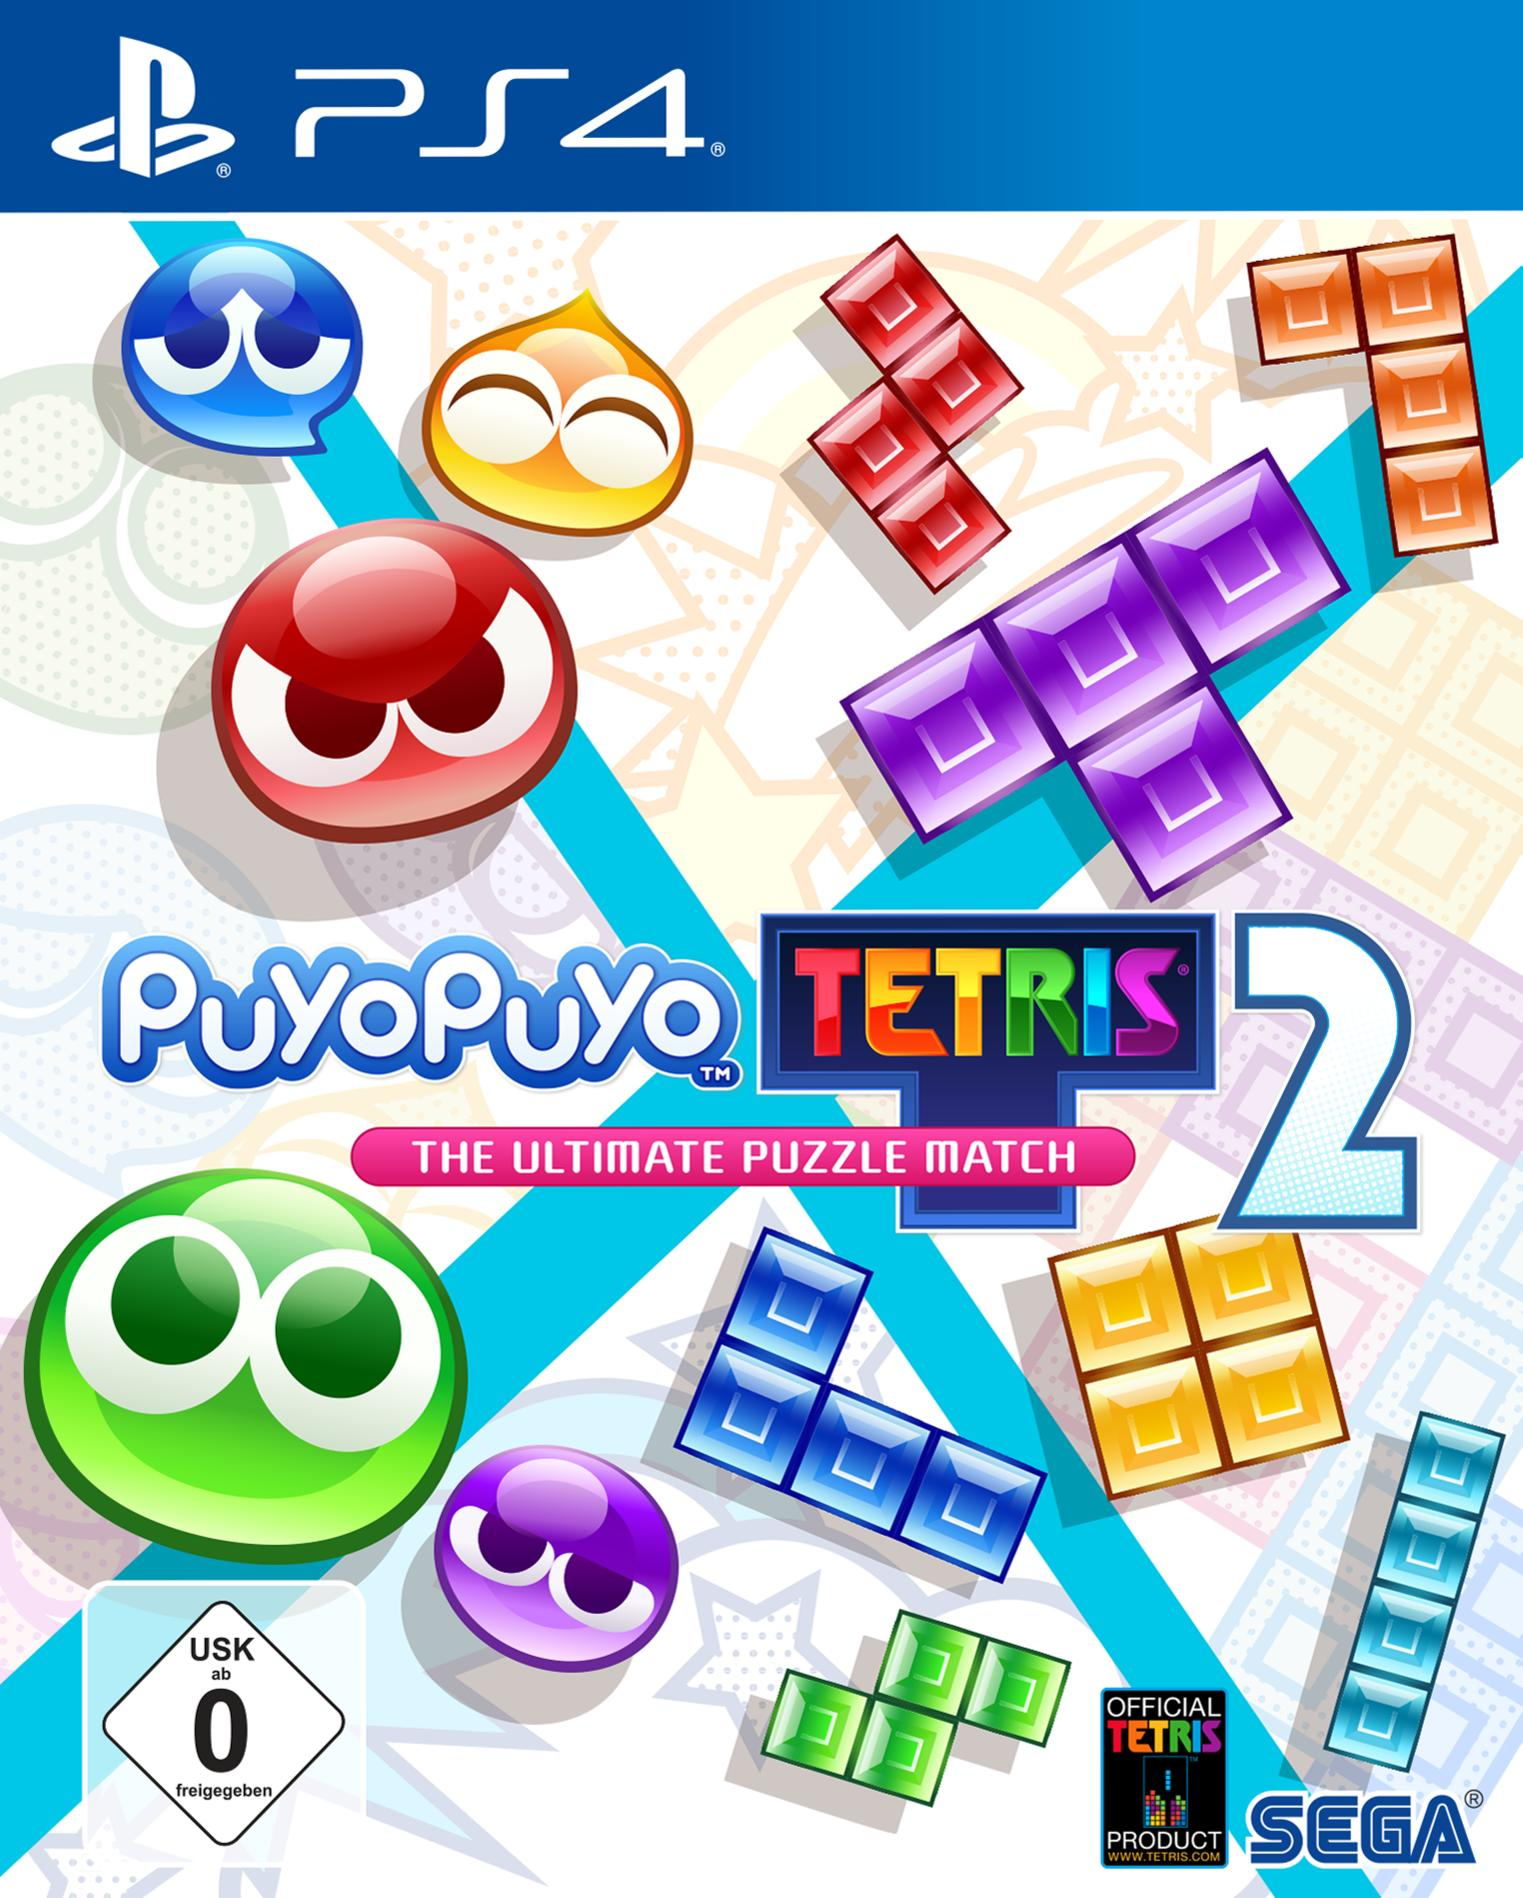 Puyo [PlayStation 2 Puyo 4] - Tetris